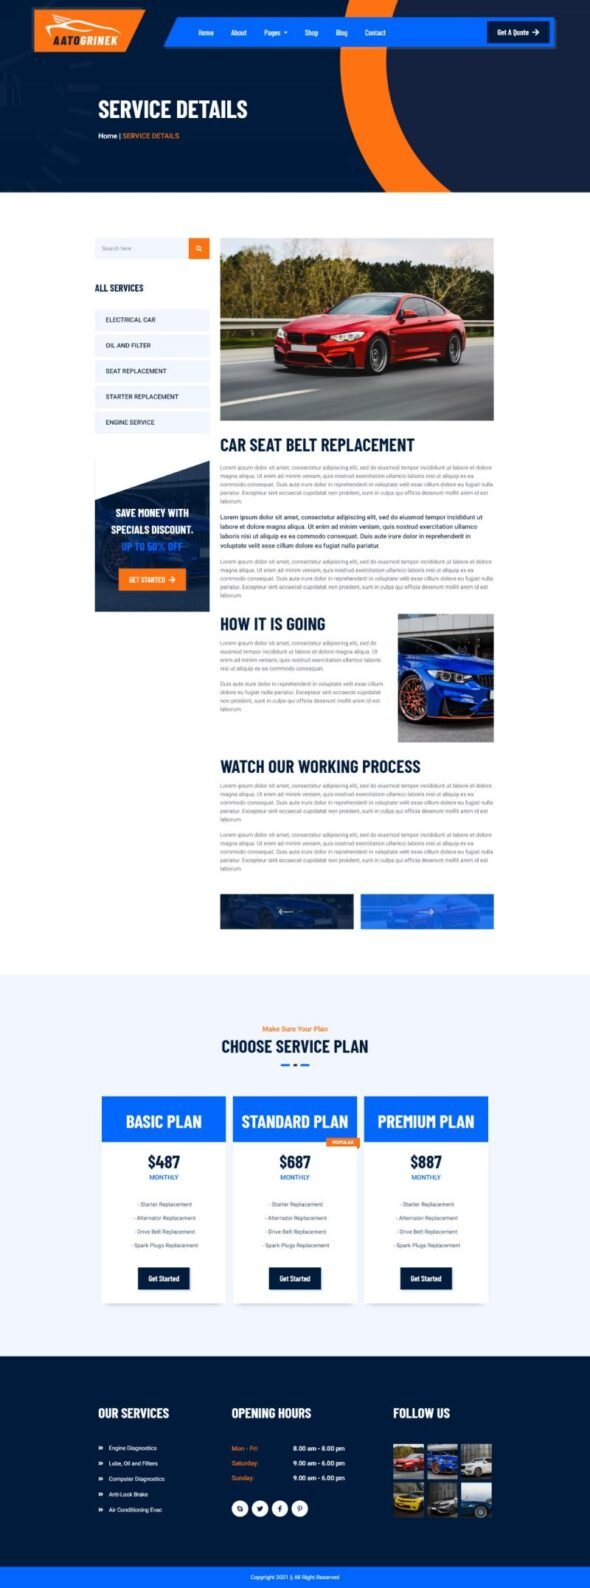 Auto Service & Car Repair Wordpress Elementor Template Kit